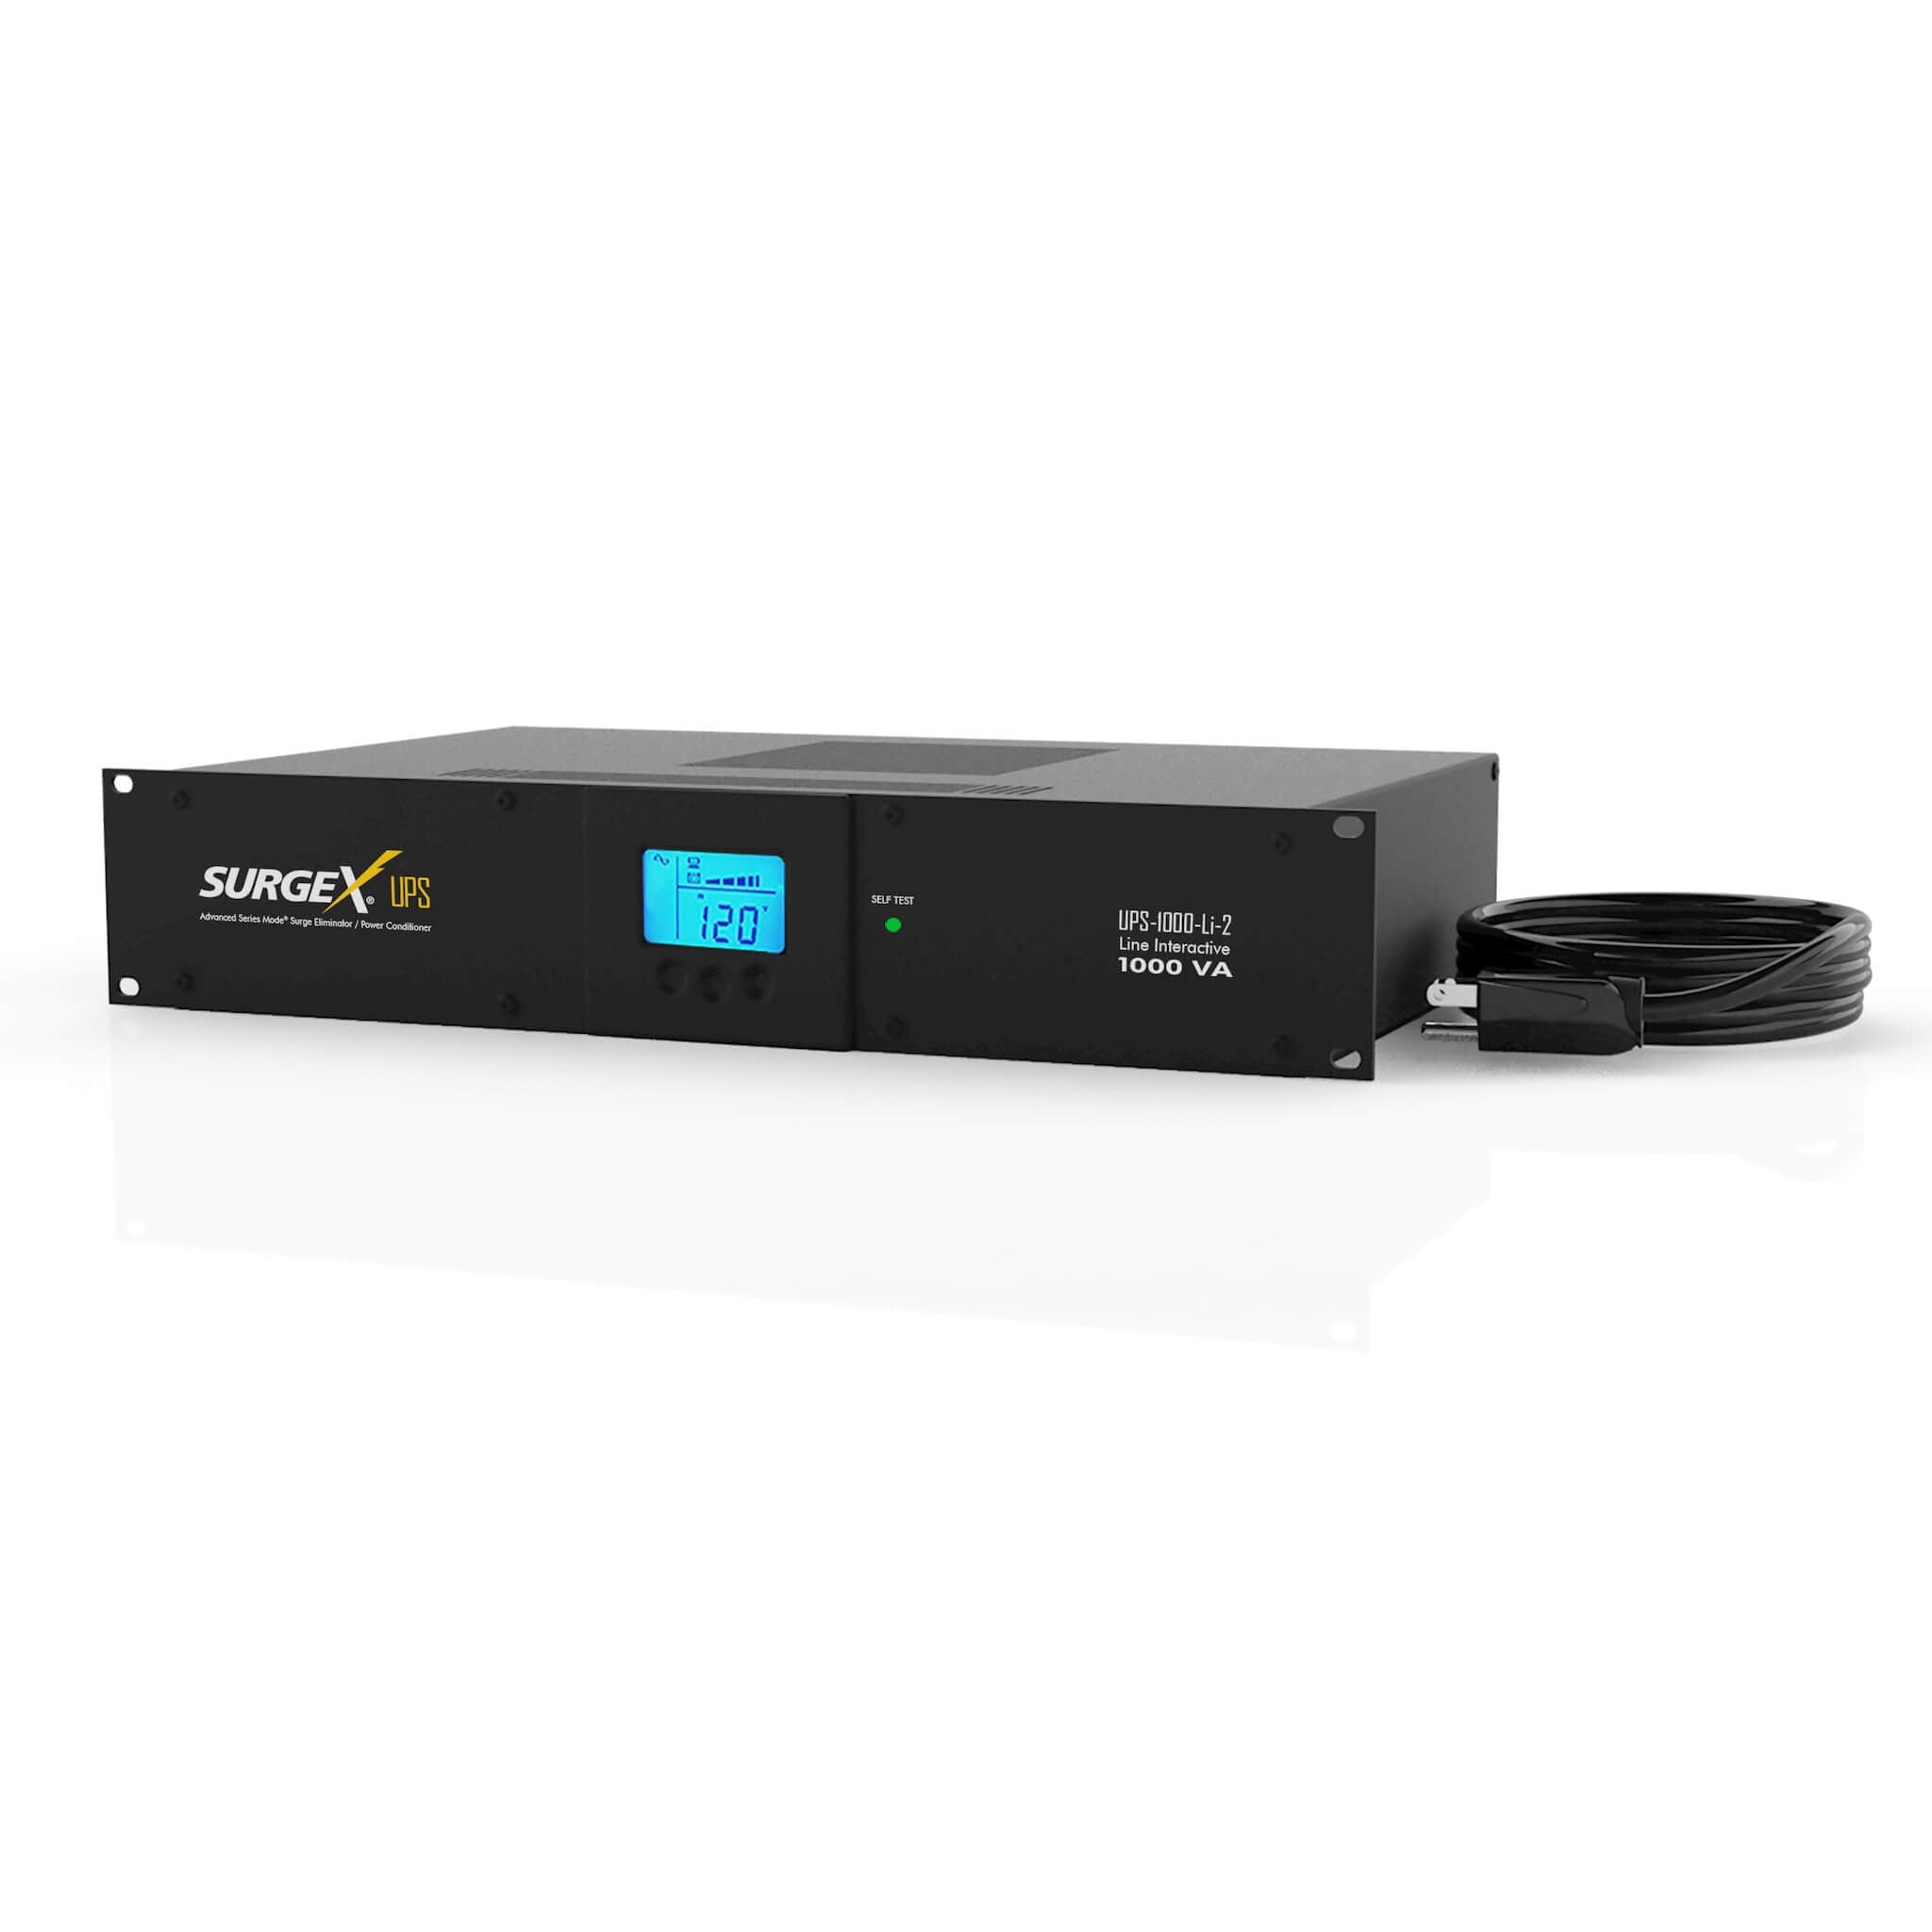 SurgeX UPS-1000-Li-2 - Line Interactive 1000VA UPS Battery Backup, rendering